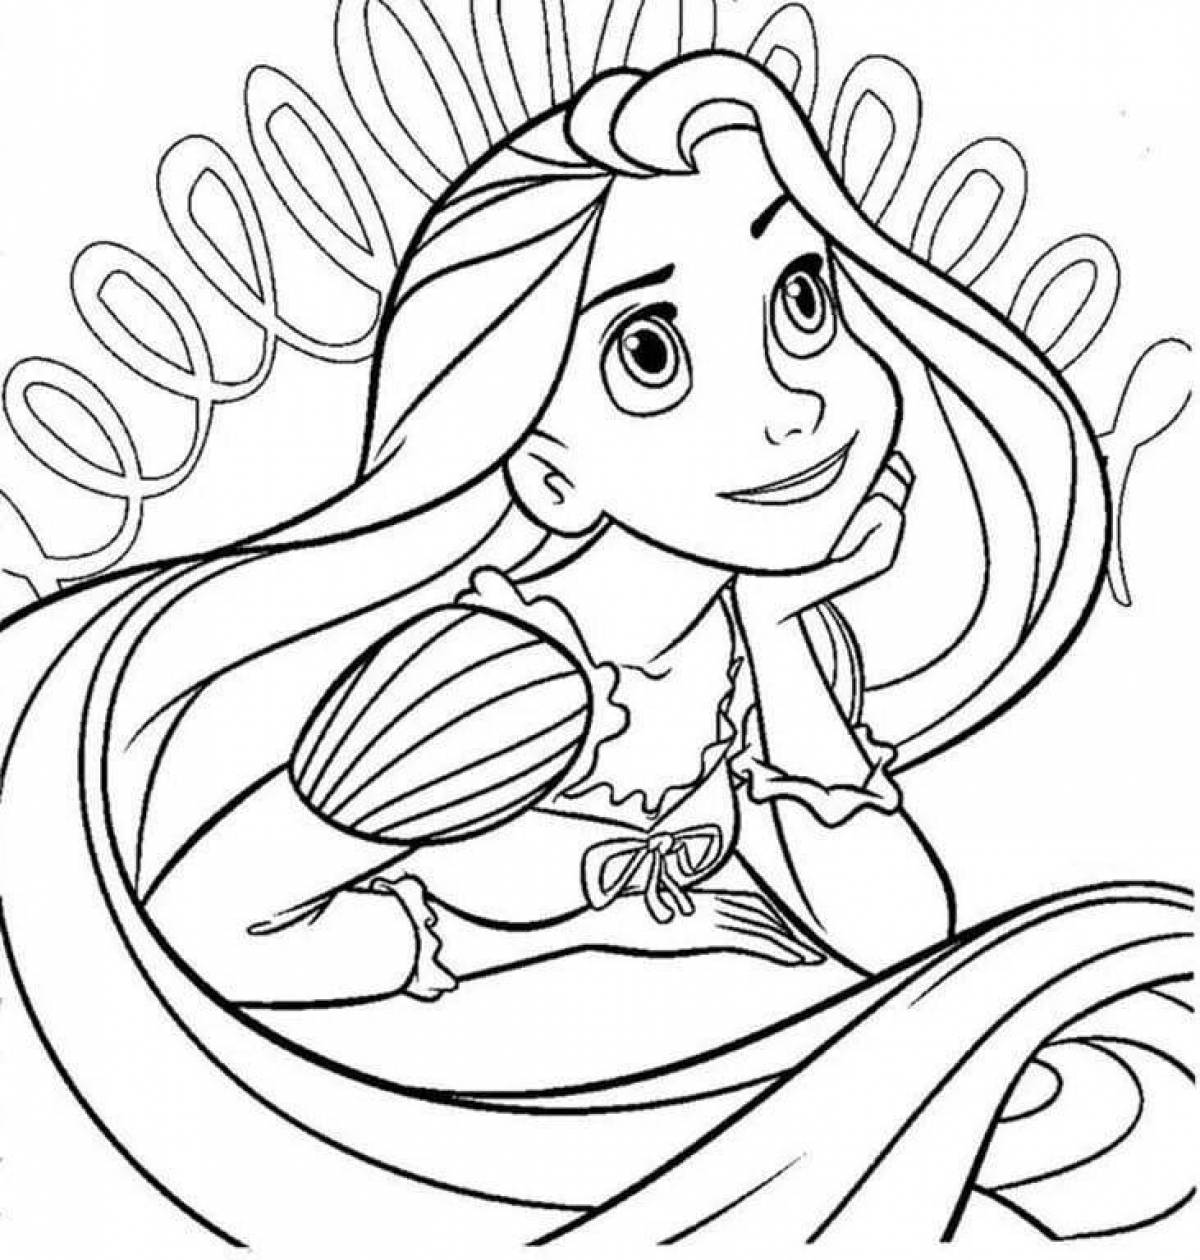 Rapunzel coloring book for kids